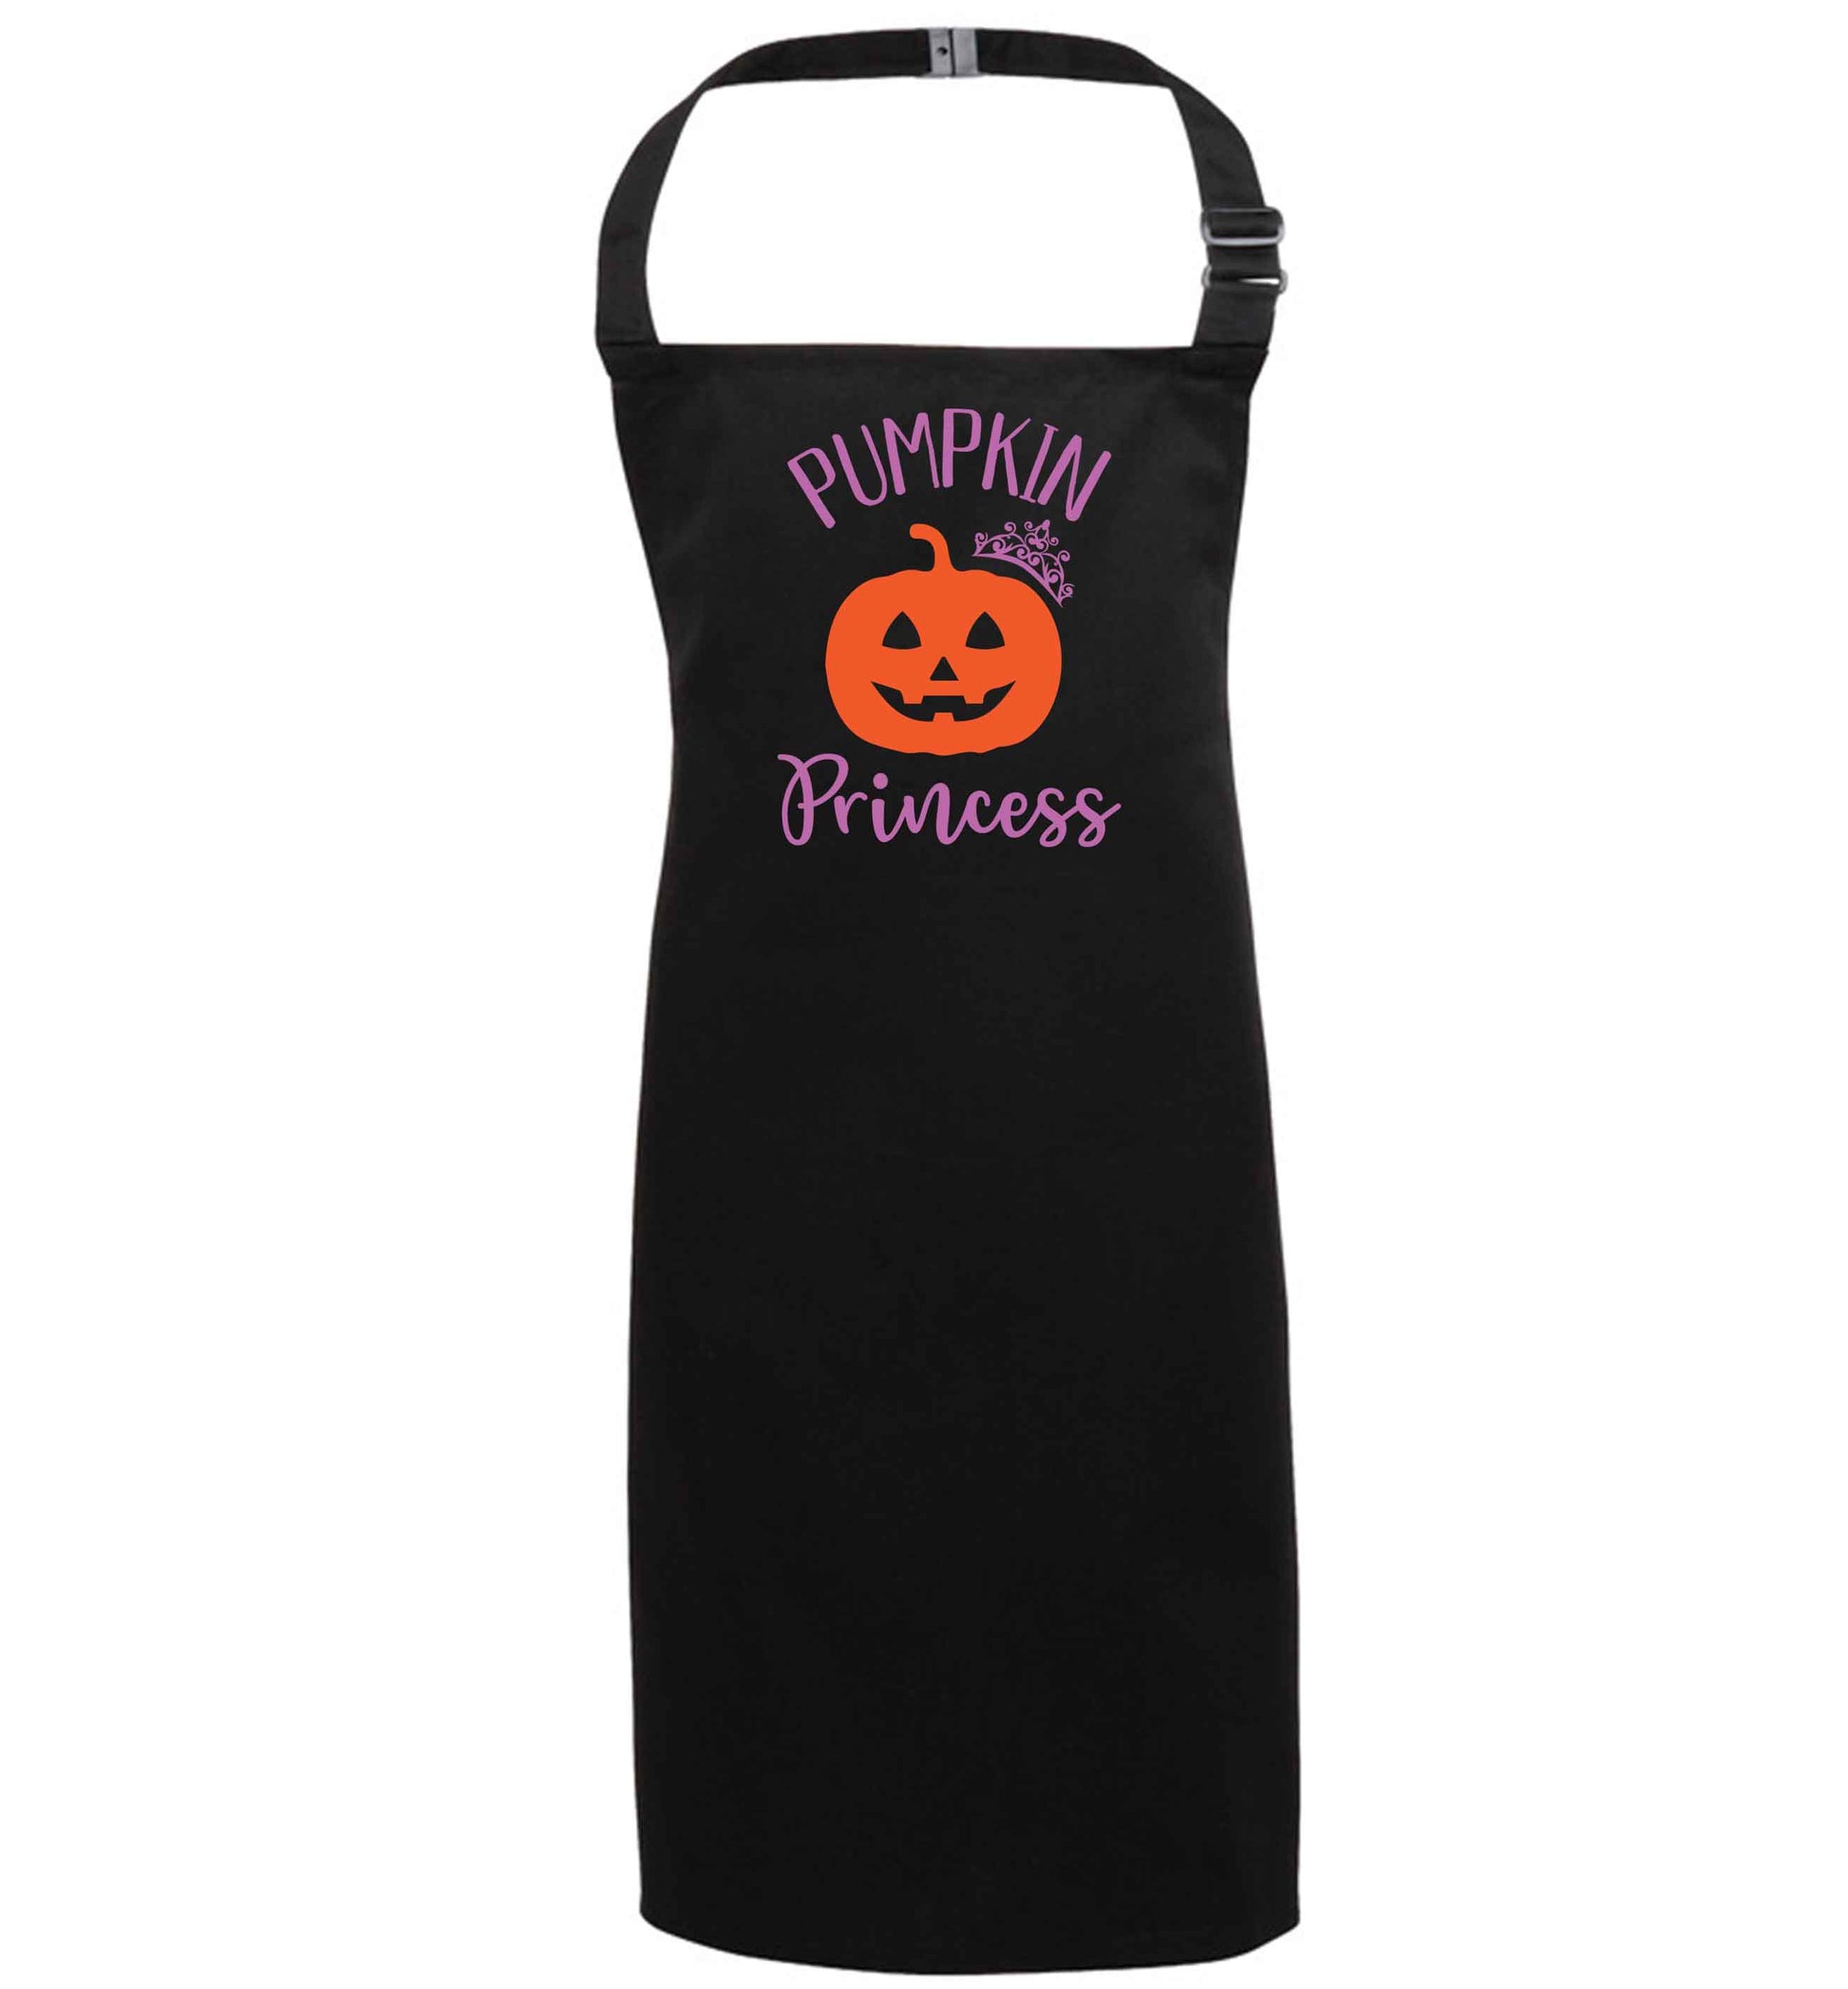 Happiness Pumpkin Spice black apron 7-10 years